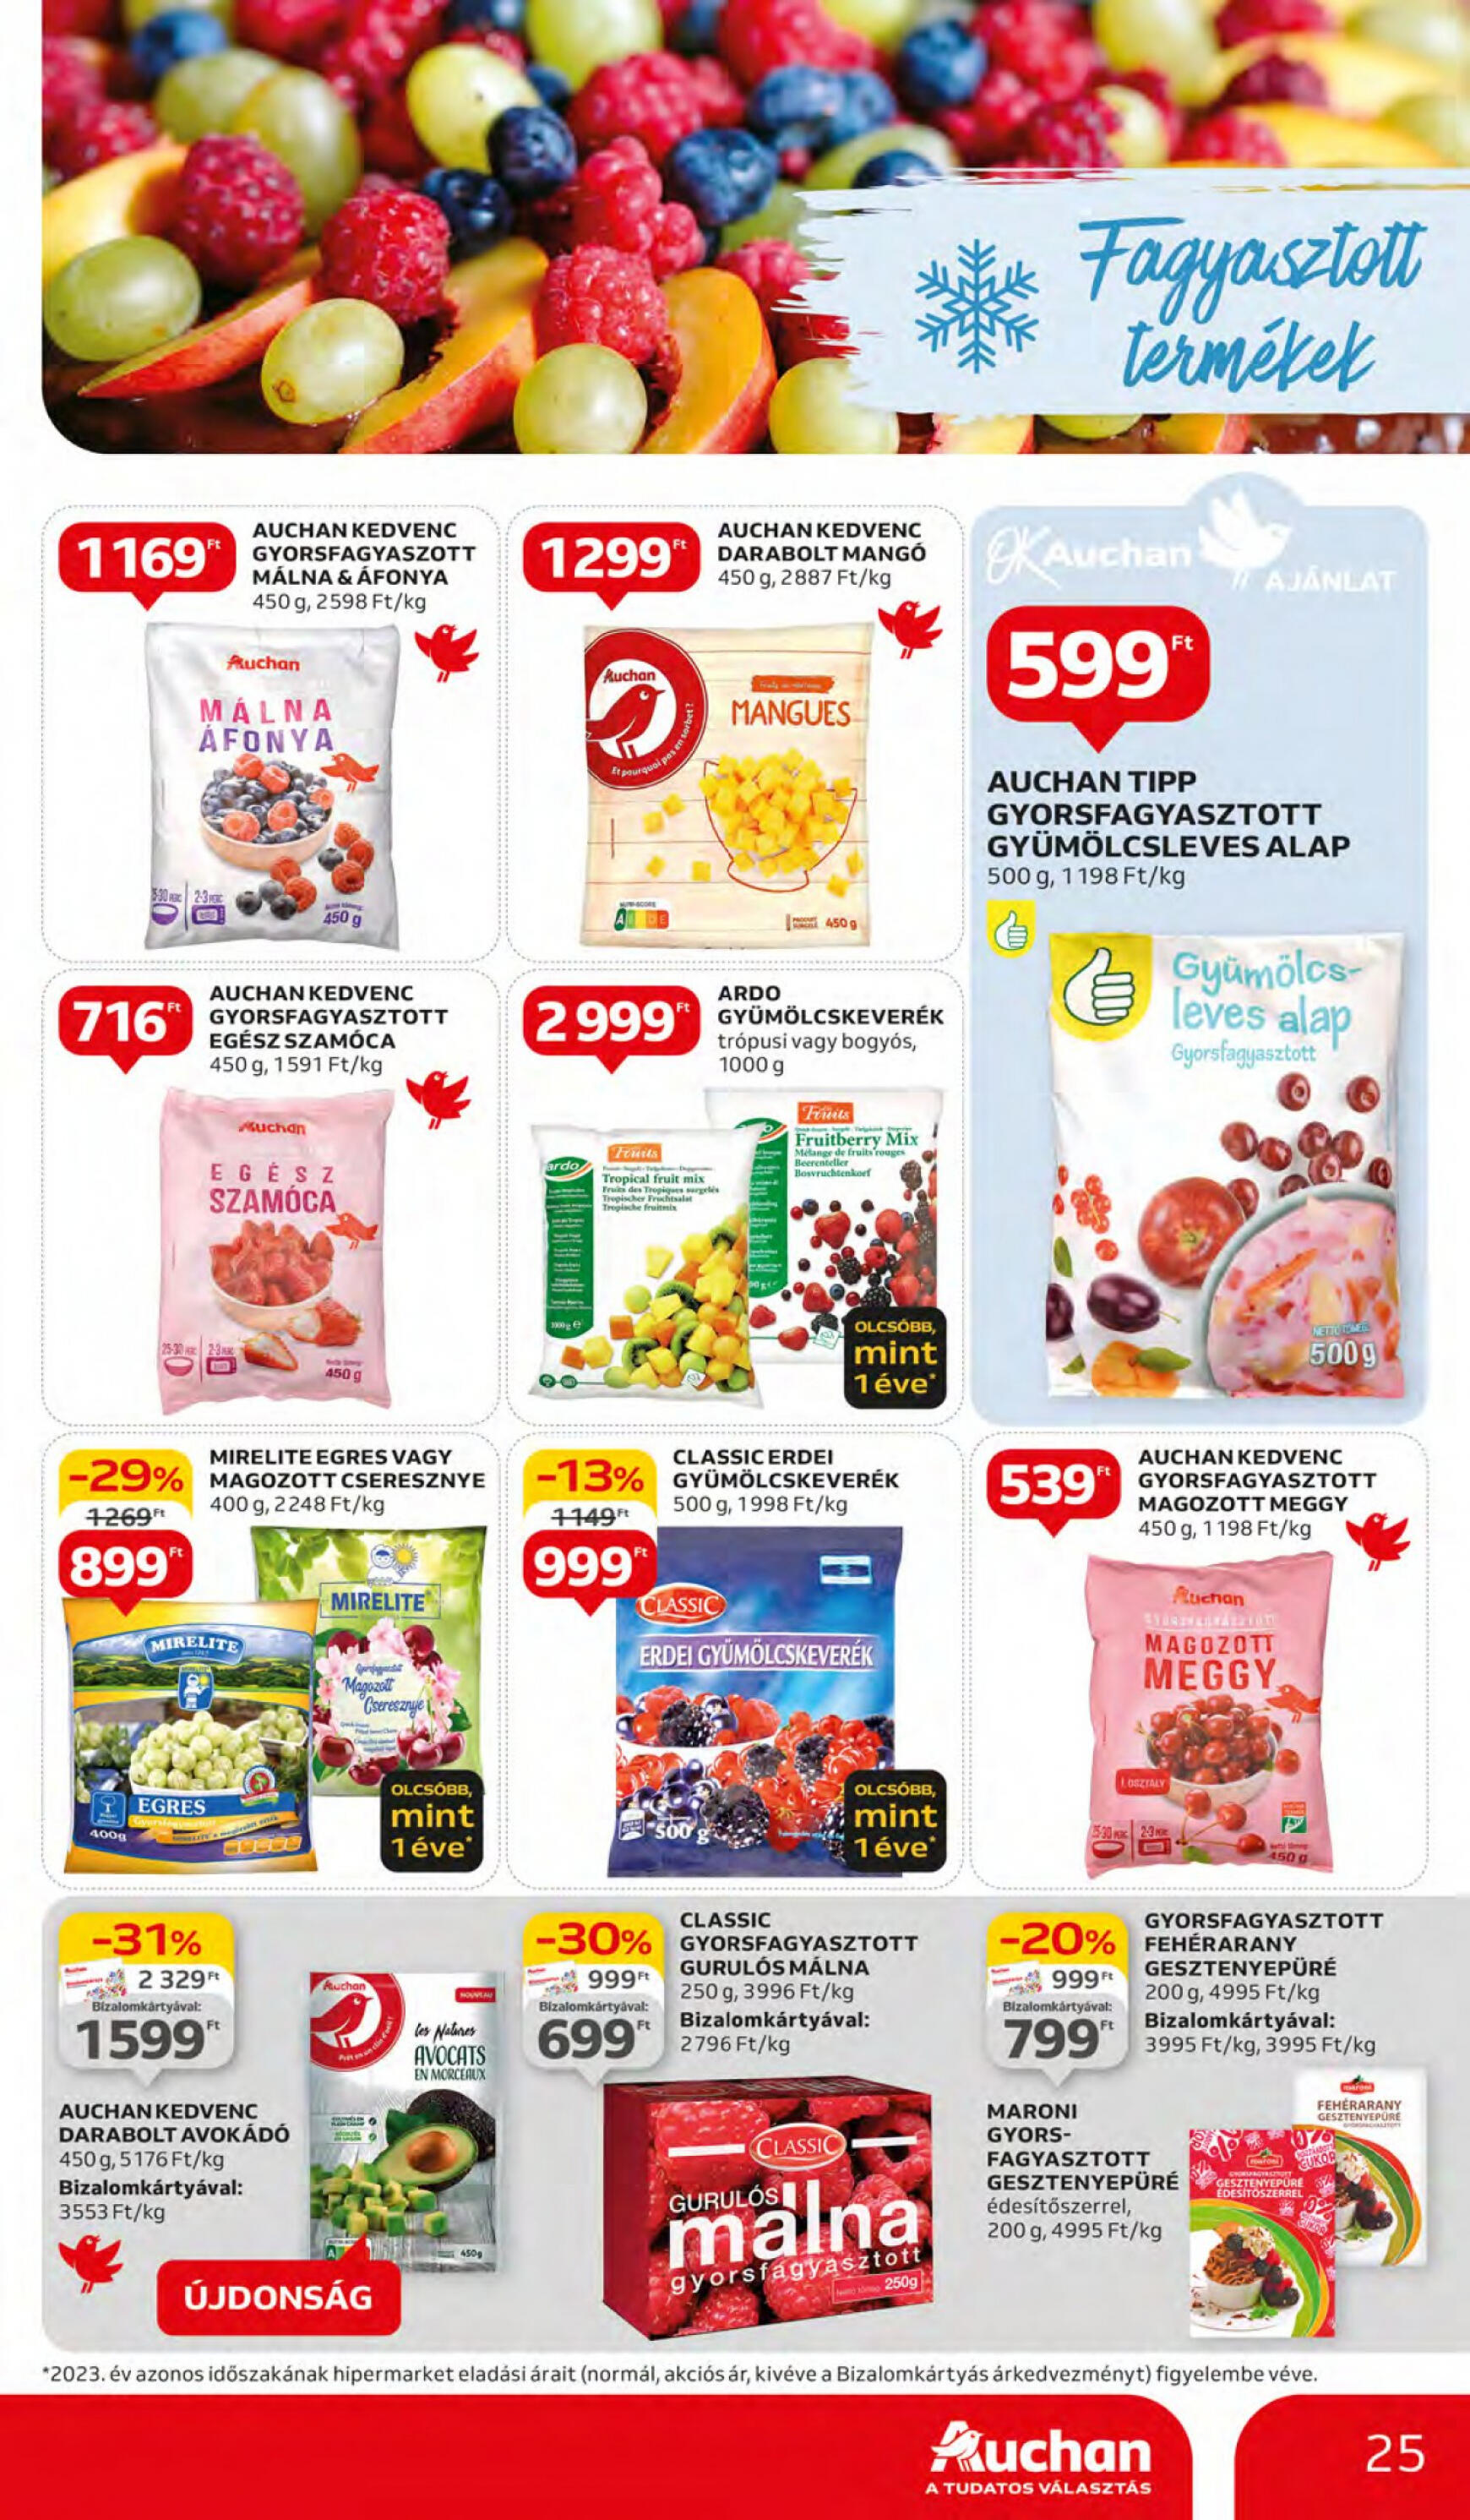 auchan - Aktuális újság Auchan 04.11. - 04.17. - page: 25